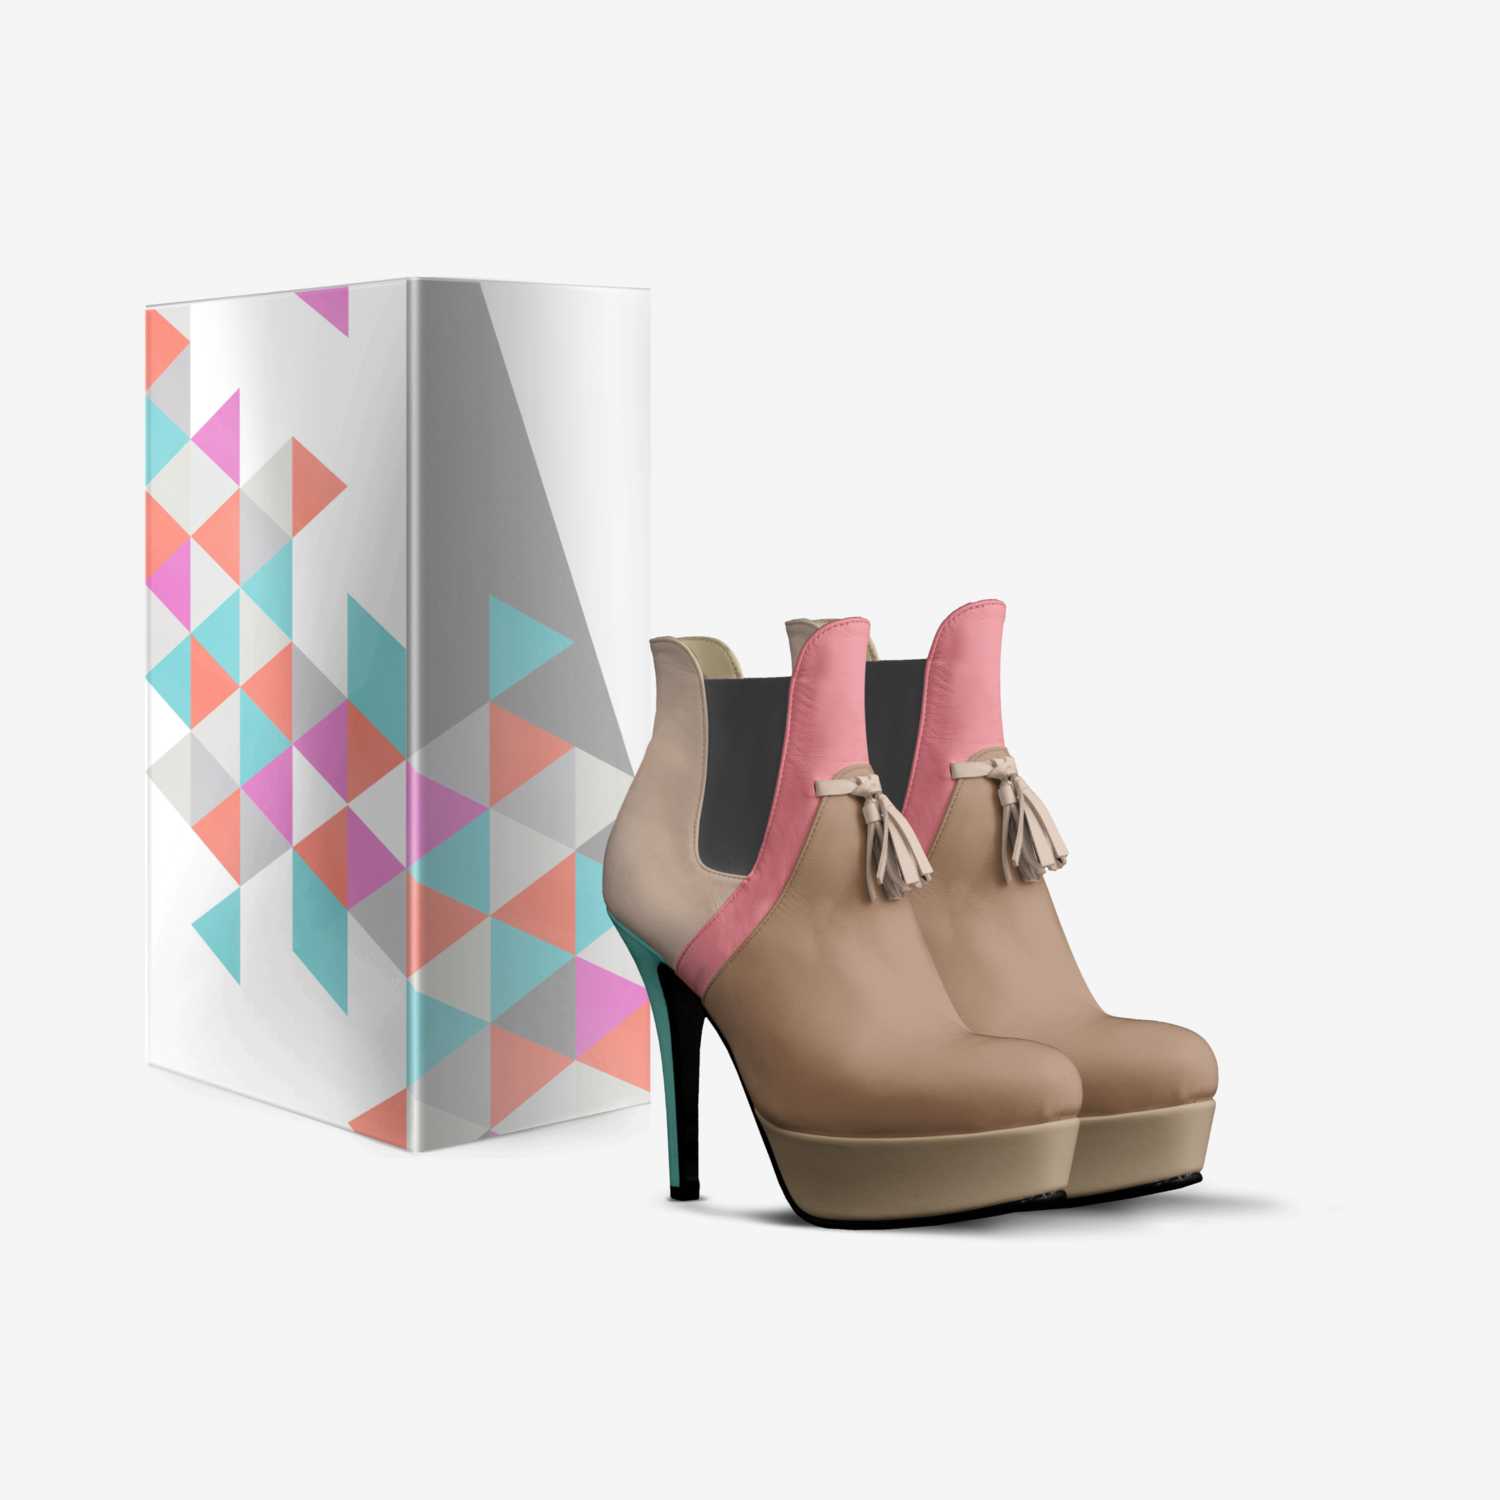 VINA custom made in Italy shoes by Calvina Morris | Box view